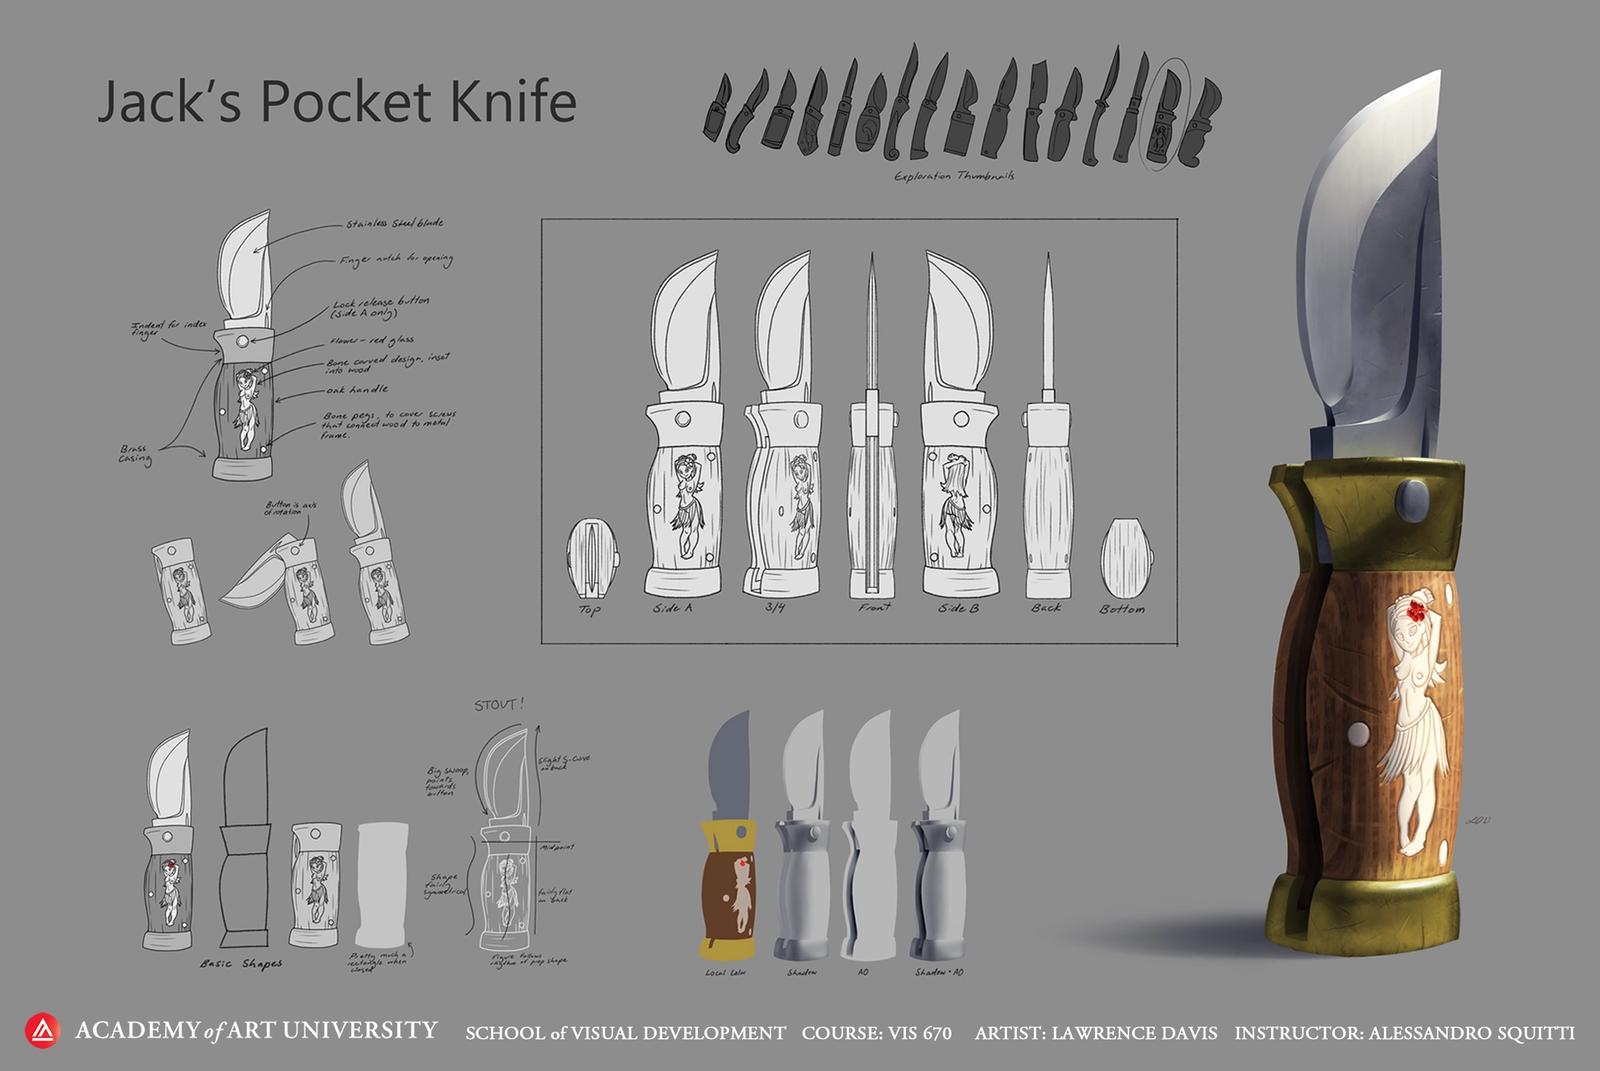 Jackson's Pocket Knife